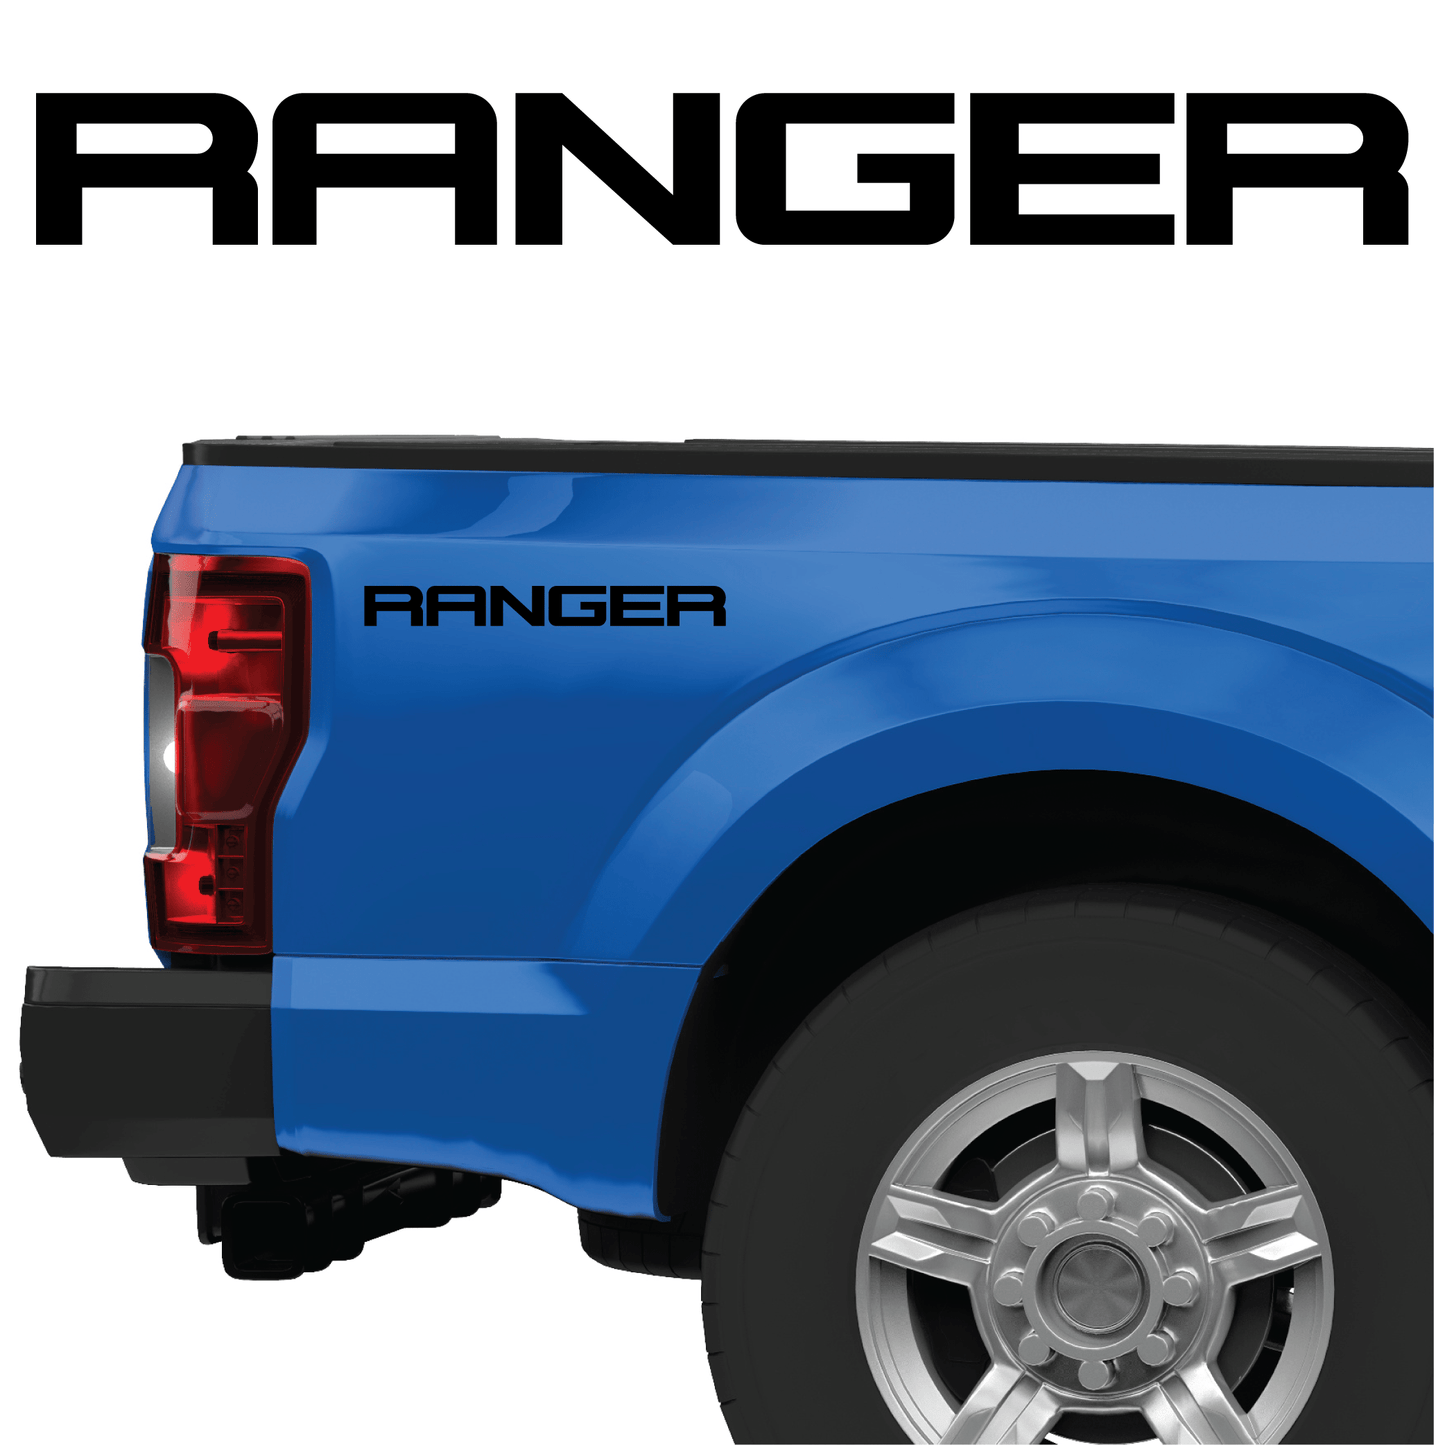 Shop Vinyl Design Ranger Trucks Replacement Bedside Decals #002 Vehicle decal 001 Shop Vinyl Design decals stickers